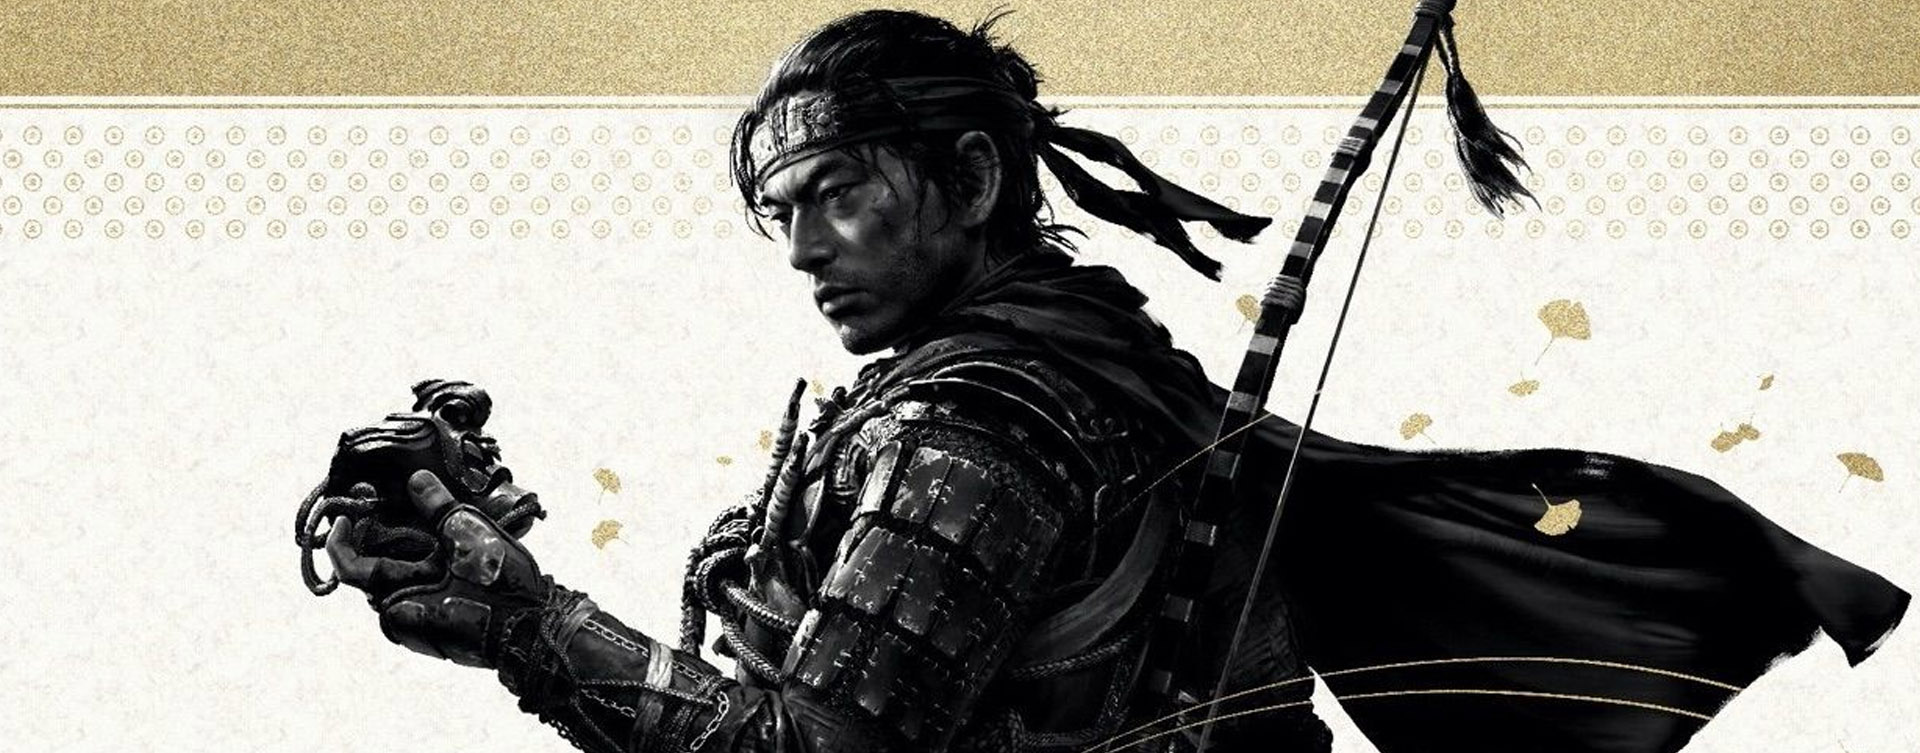 Ghost of Tsushima review -- Samurai's creed